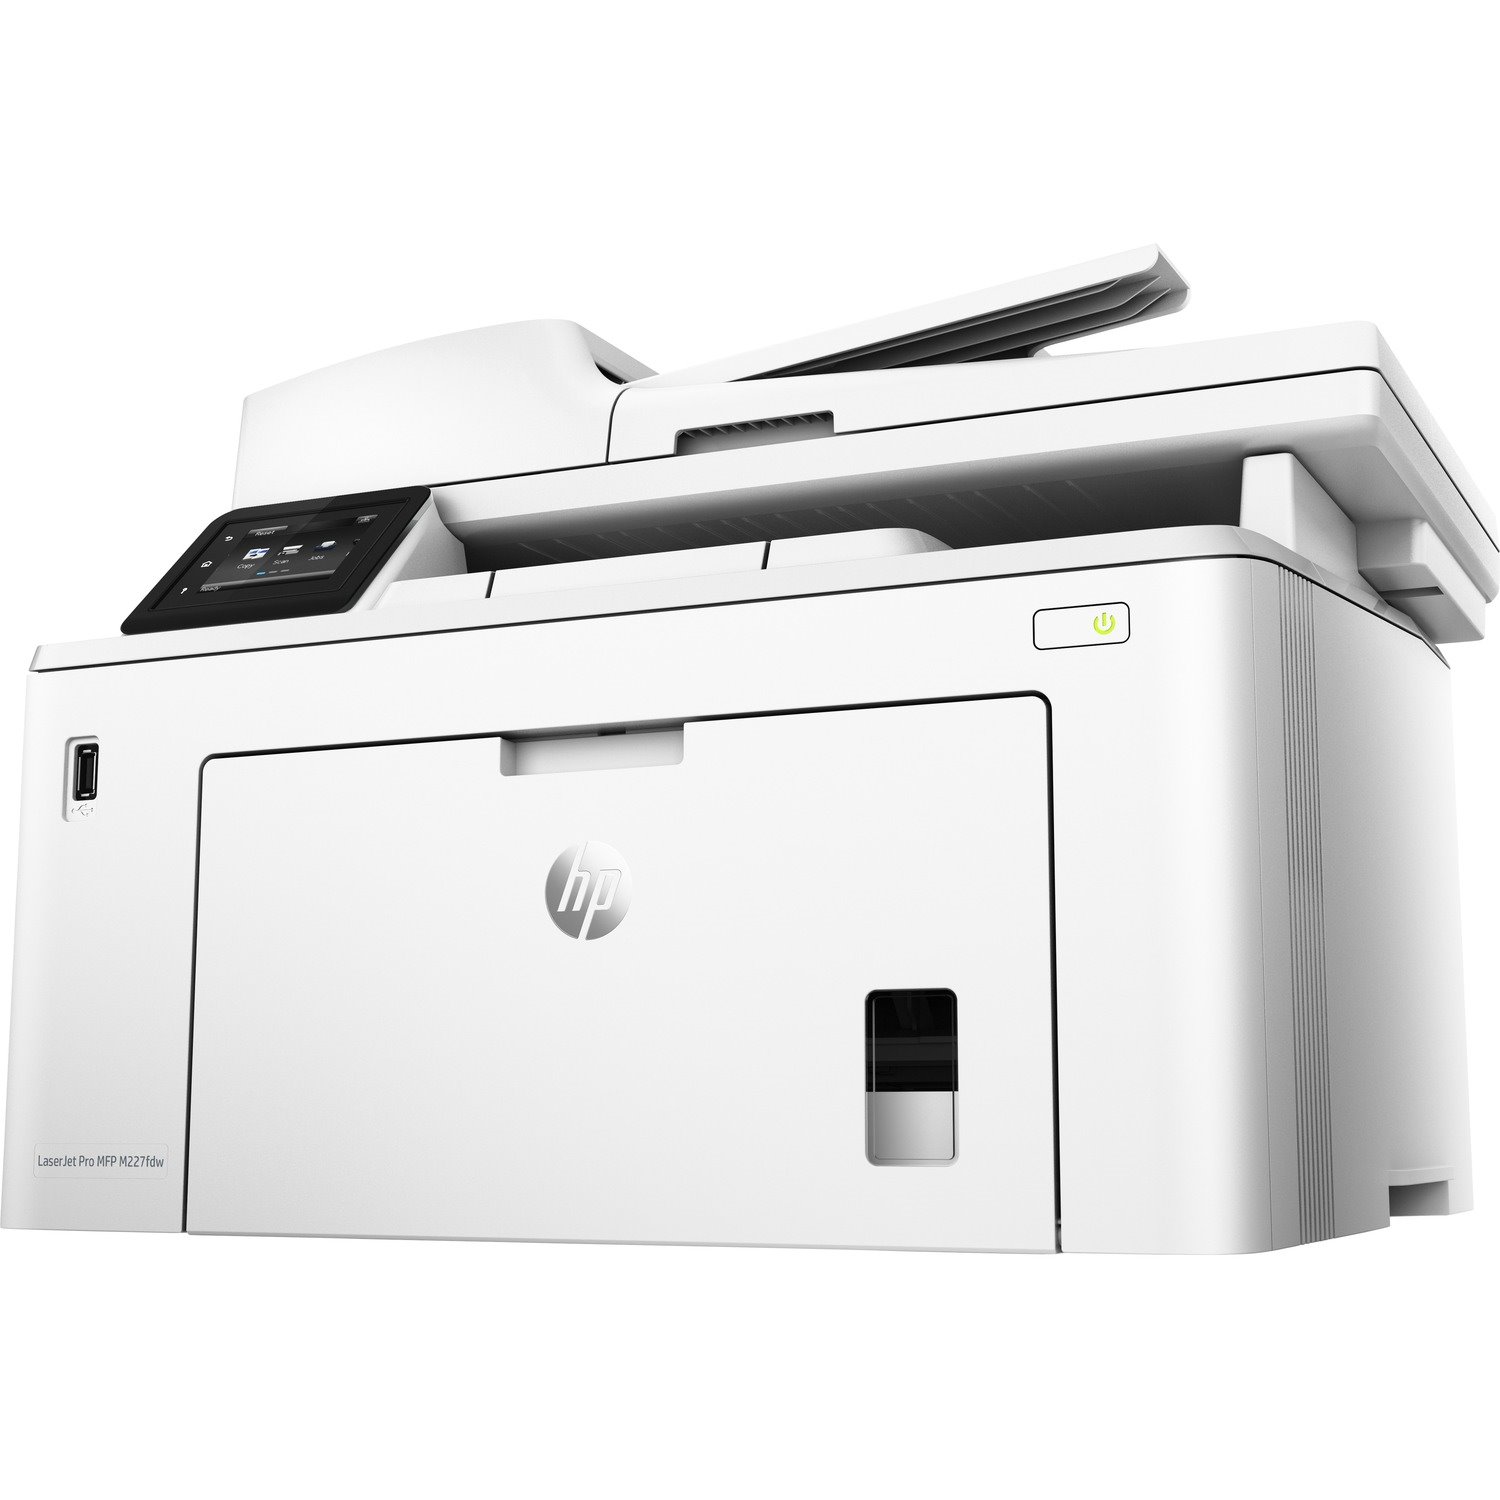 HP LaserJet Pro M227fdw Laser Multifunction Printer-Monochrome-Copier/Fax/Scanner-28 ppm Mono Print-1200x1200 dpi Print-Automatic Duplex Print-30000 Pages-250 sheets Input-1200 dpi Optical Scan-Wireless LAN